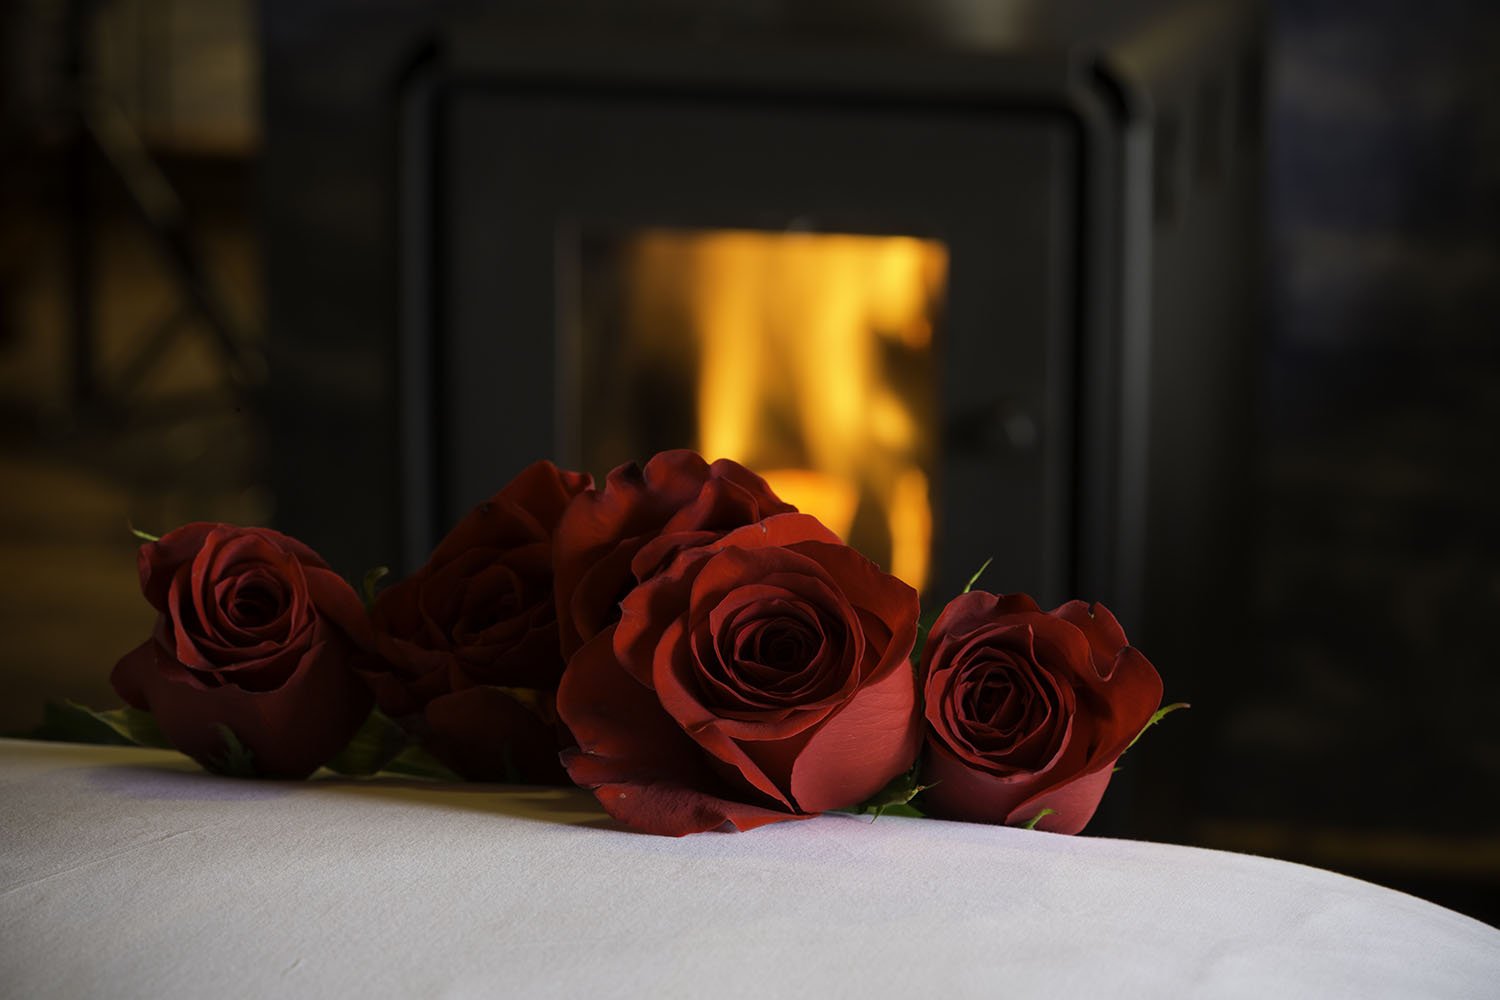 Roses and Fireplace Romantic Room Angel del Volcan 46 - Luna Volcan - Hotel en Banos Ecuador.jpg